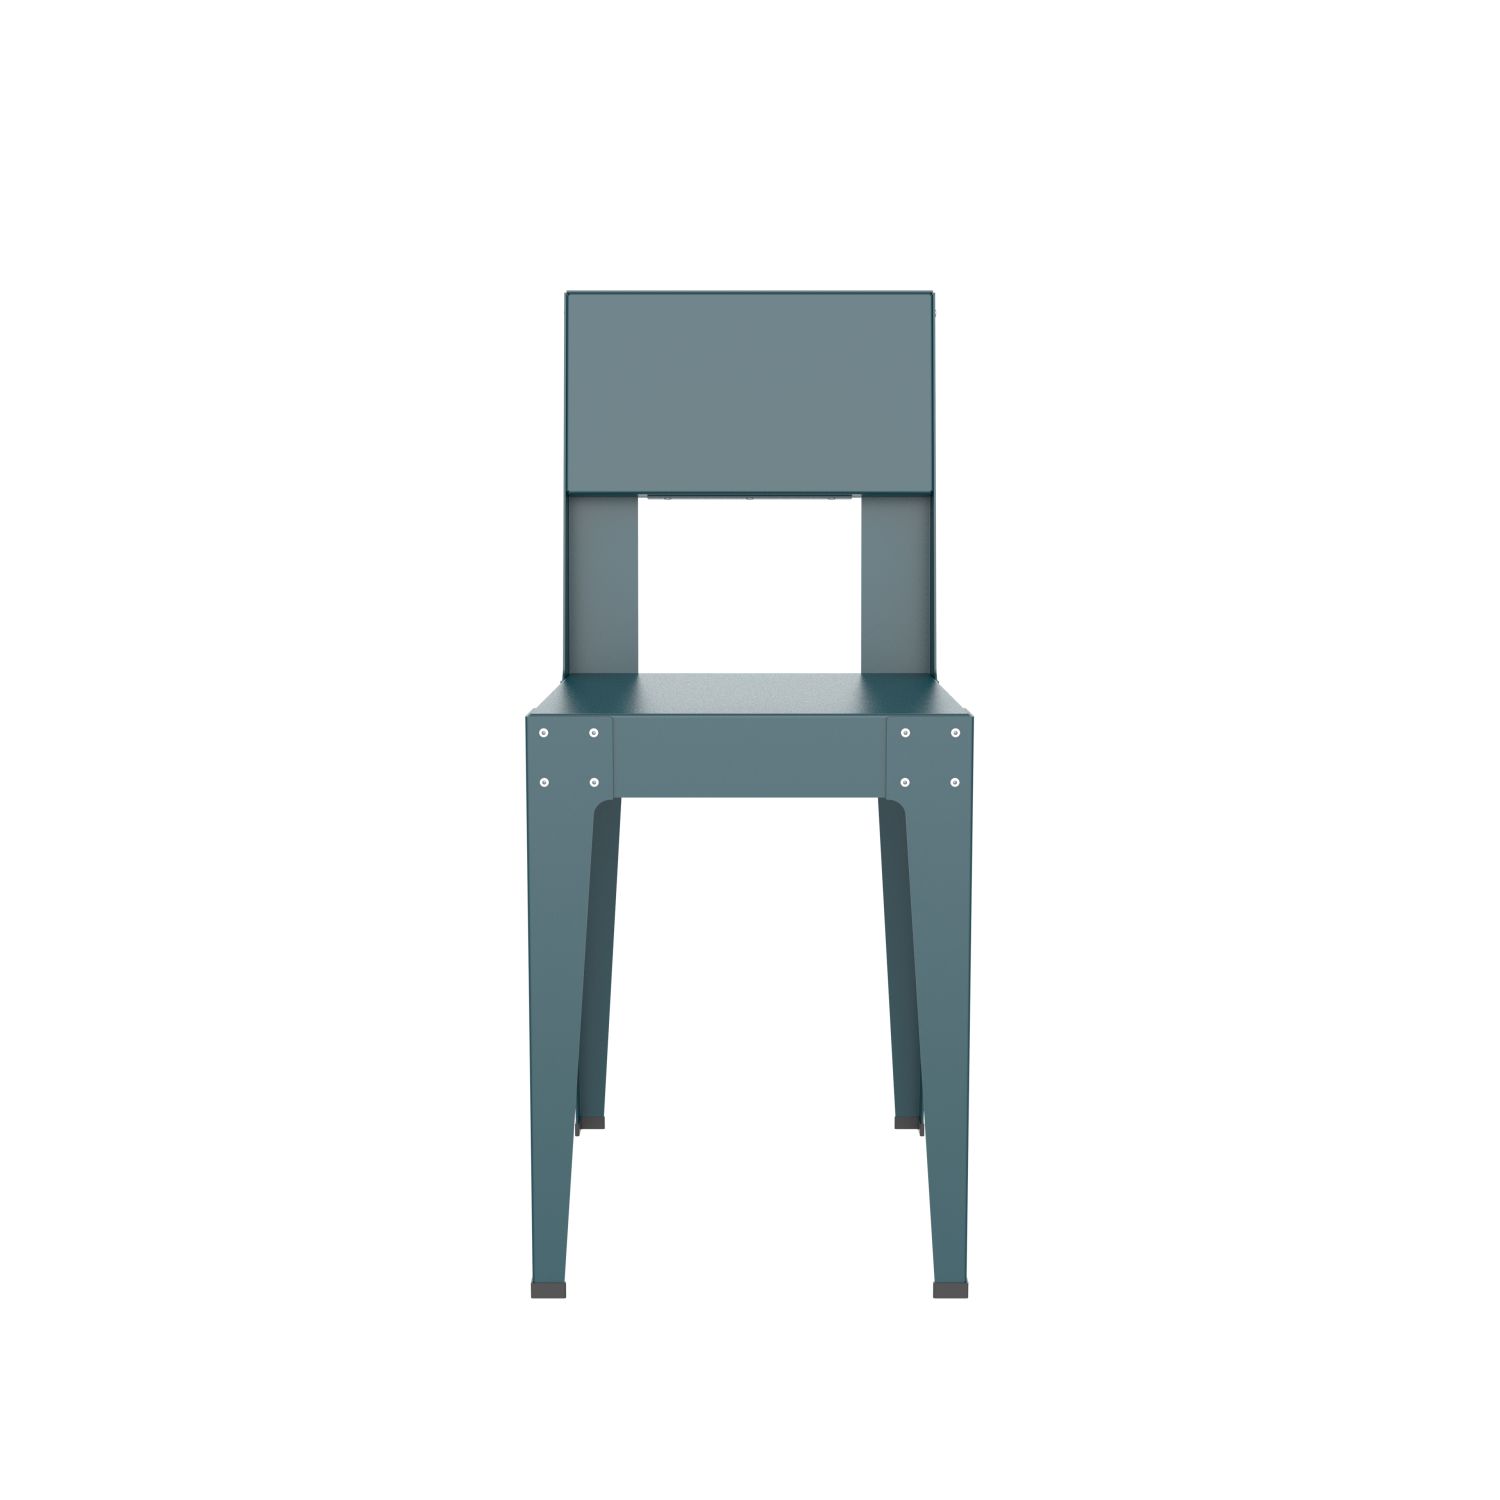 lensvelt piet hein eek aluminium series chair ocean blue ral5020 hard leg ends